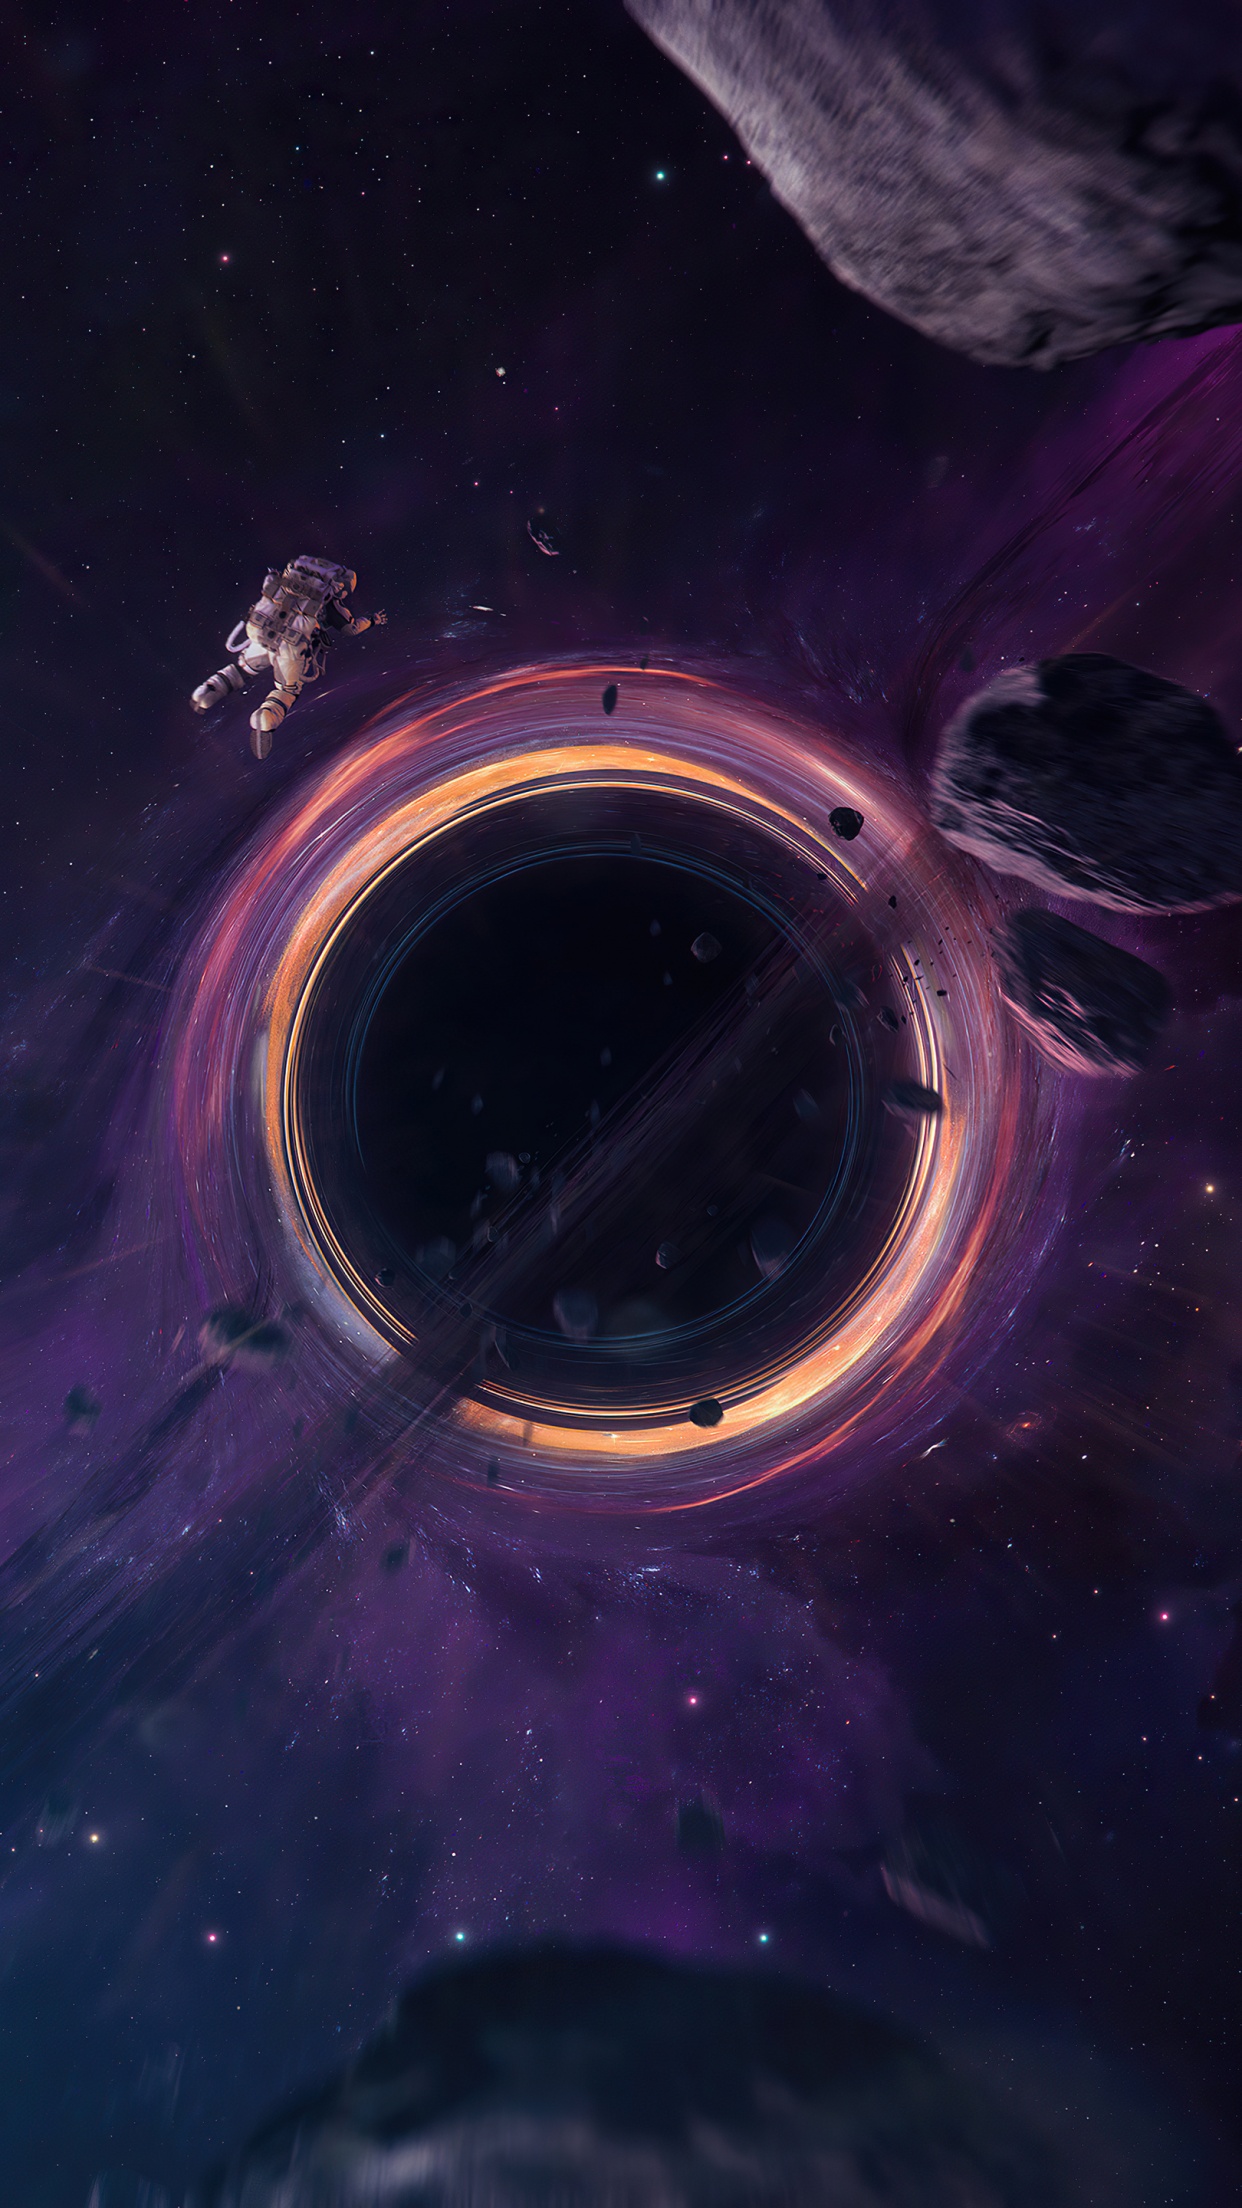 Astronaut 4K Wallpaper, Anomaly, Celestial, Black hole, Asteroids, 5K